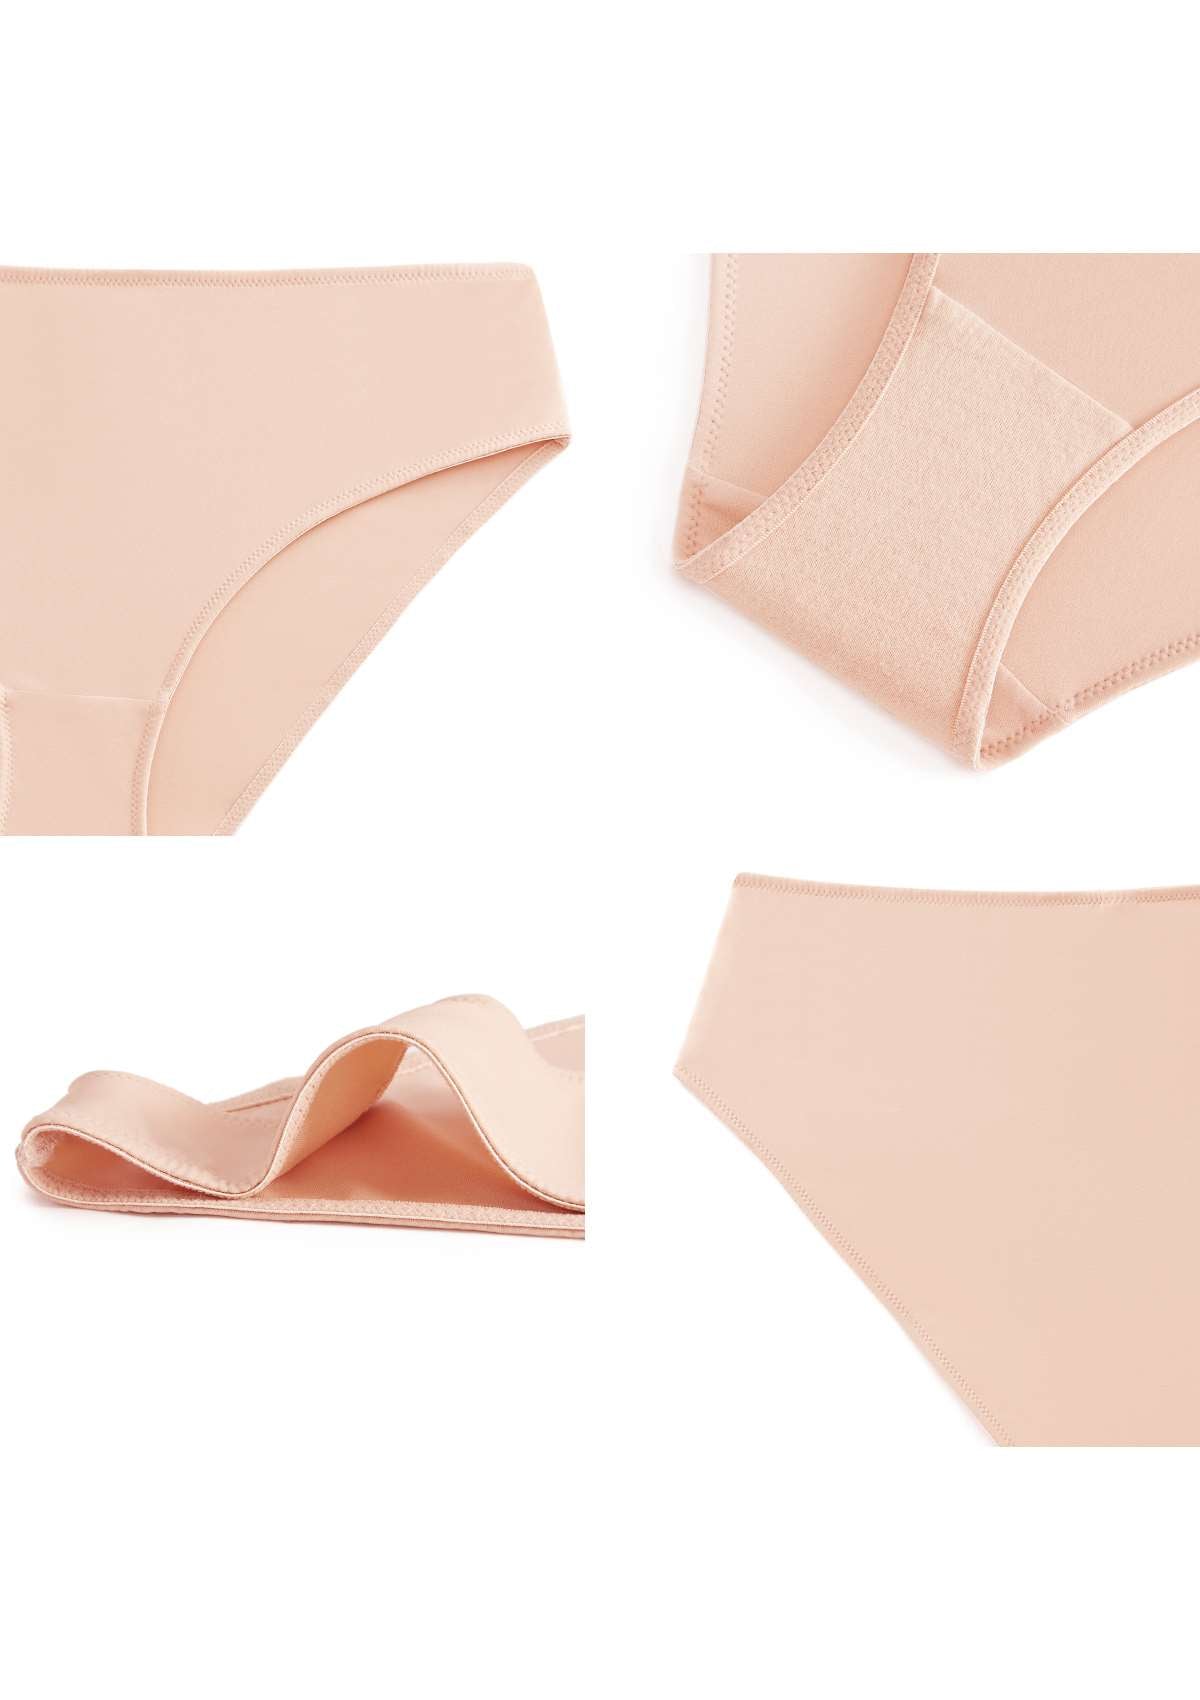 HSIA Patricia Smooth Soft Stretch Comfort High-Rise Brief Underwear - XL / Beige